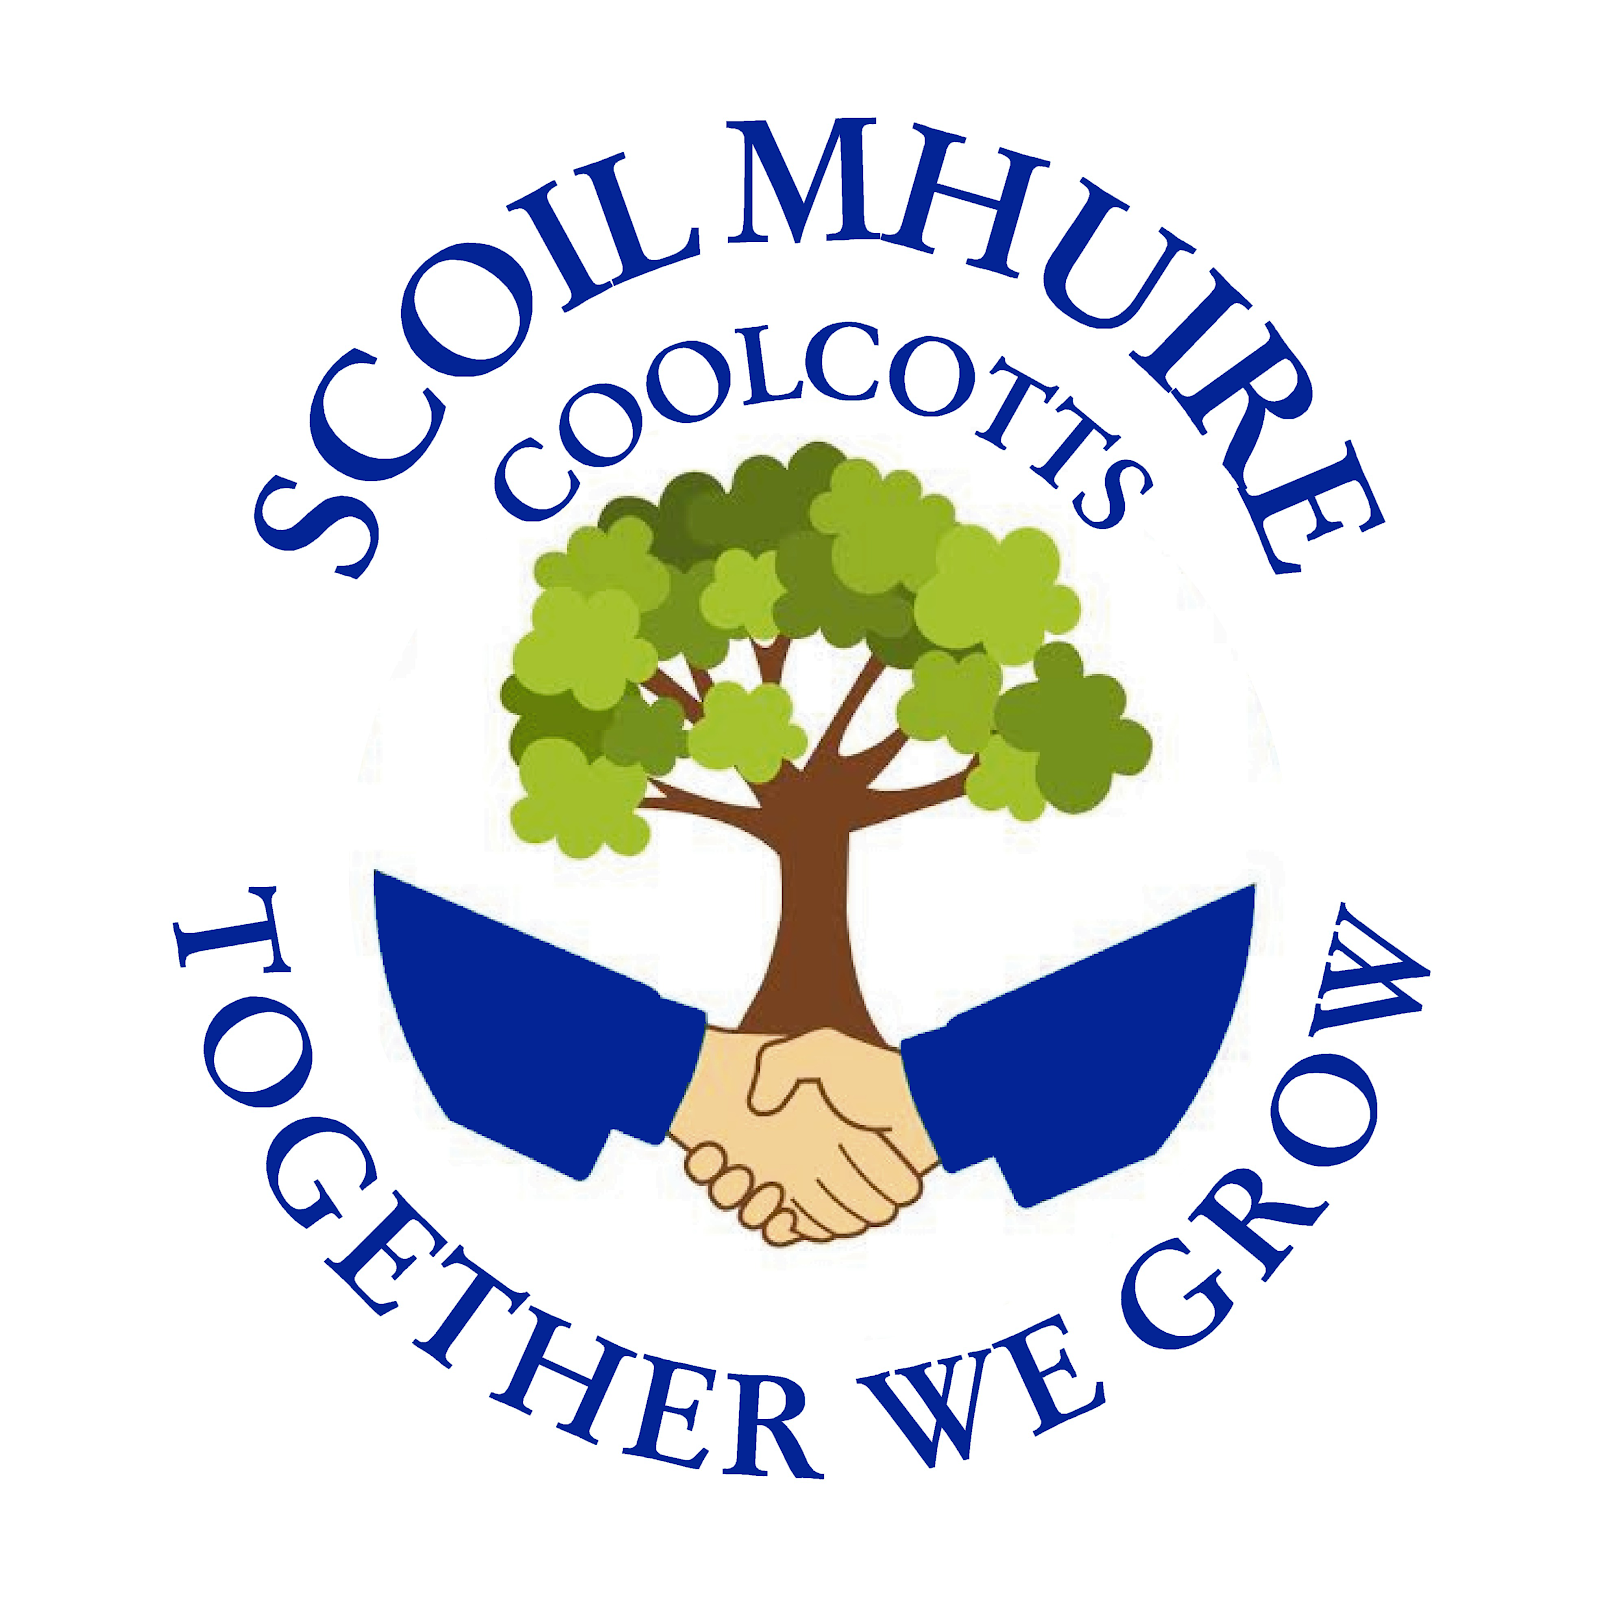 Scoil Mhuire - Coolcotts